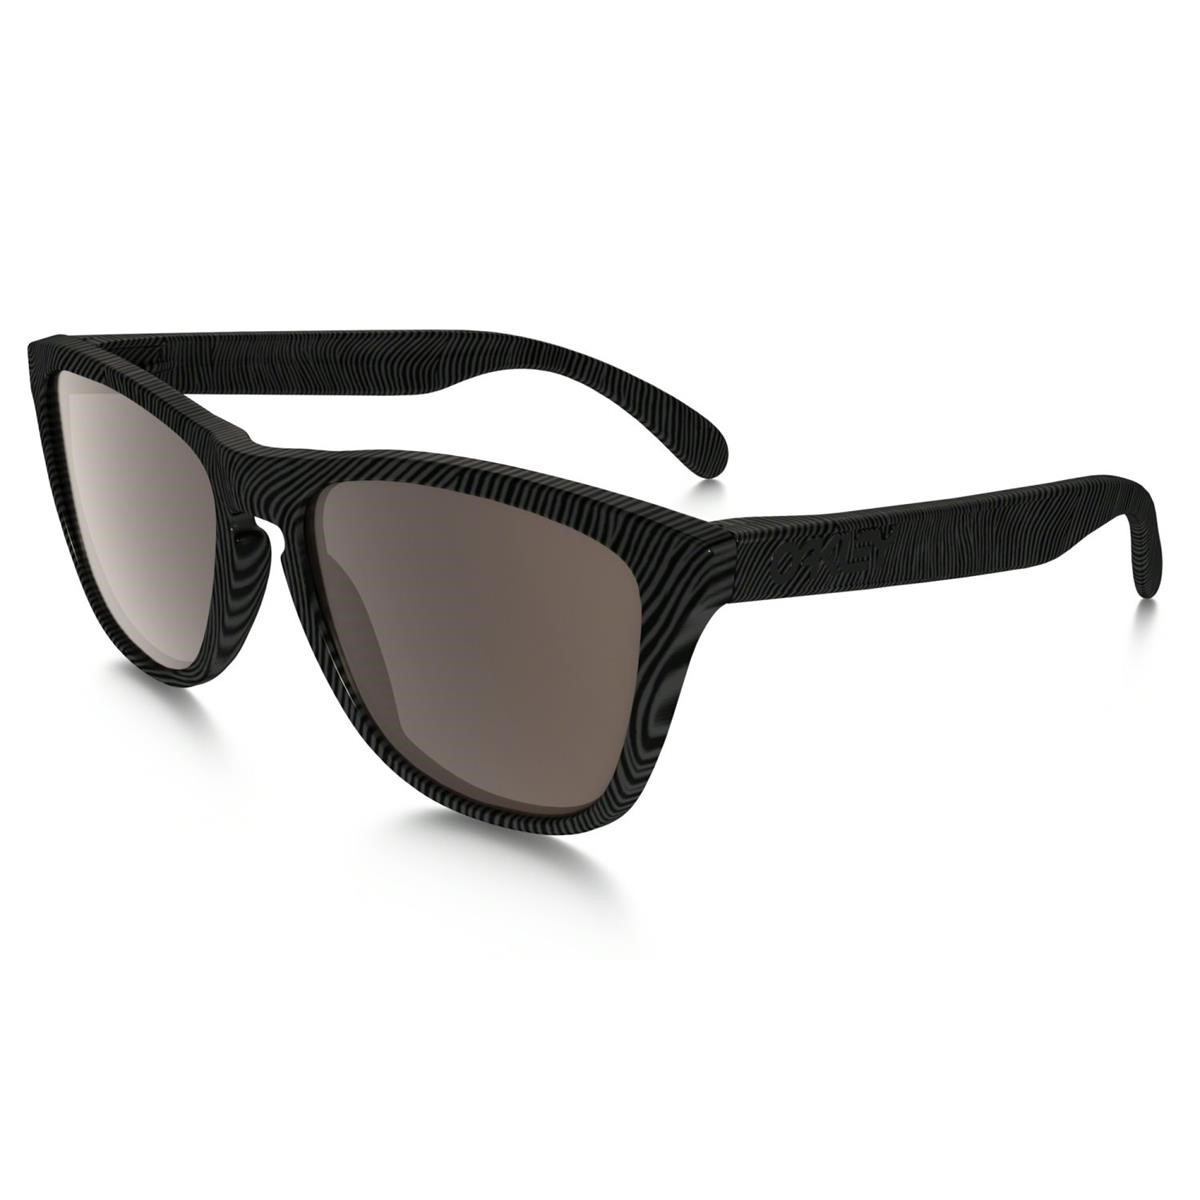 Oakley Sunglasses Frogskins Dark Grey/Warm Grey